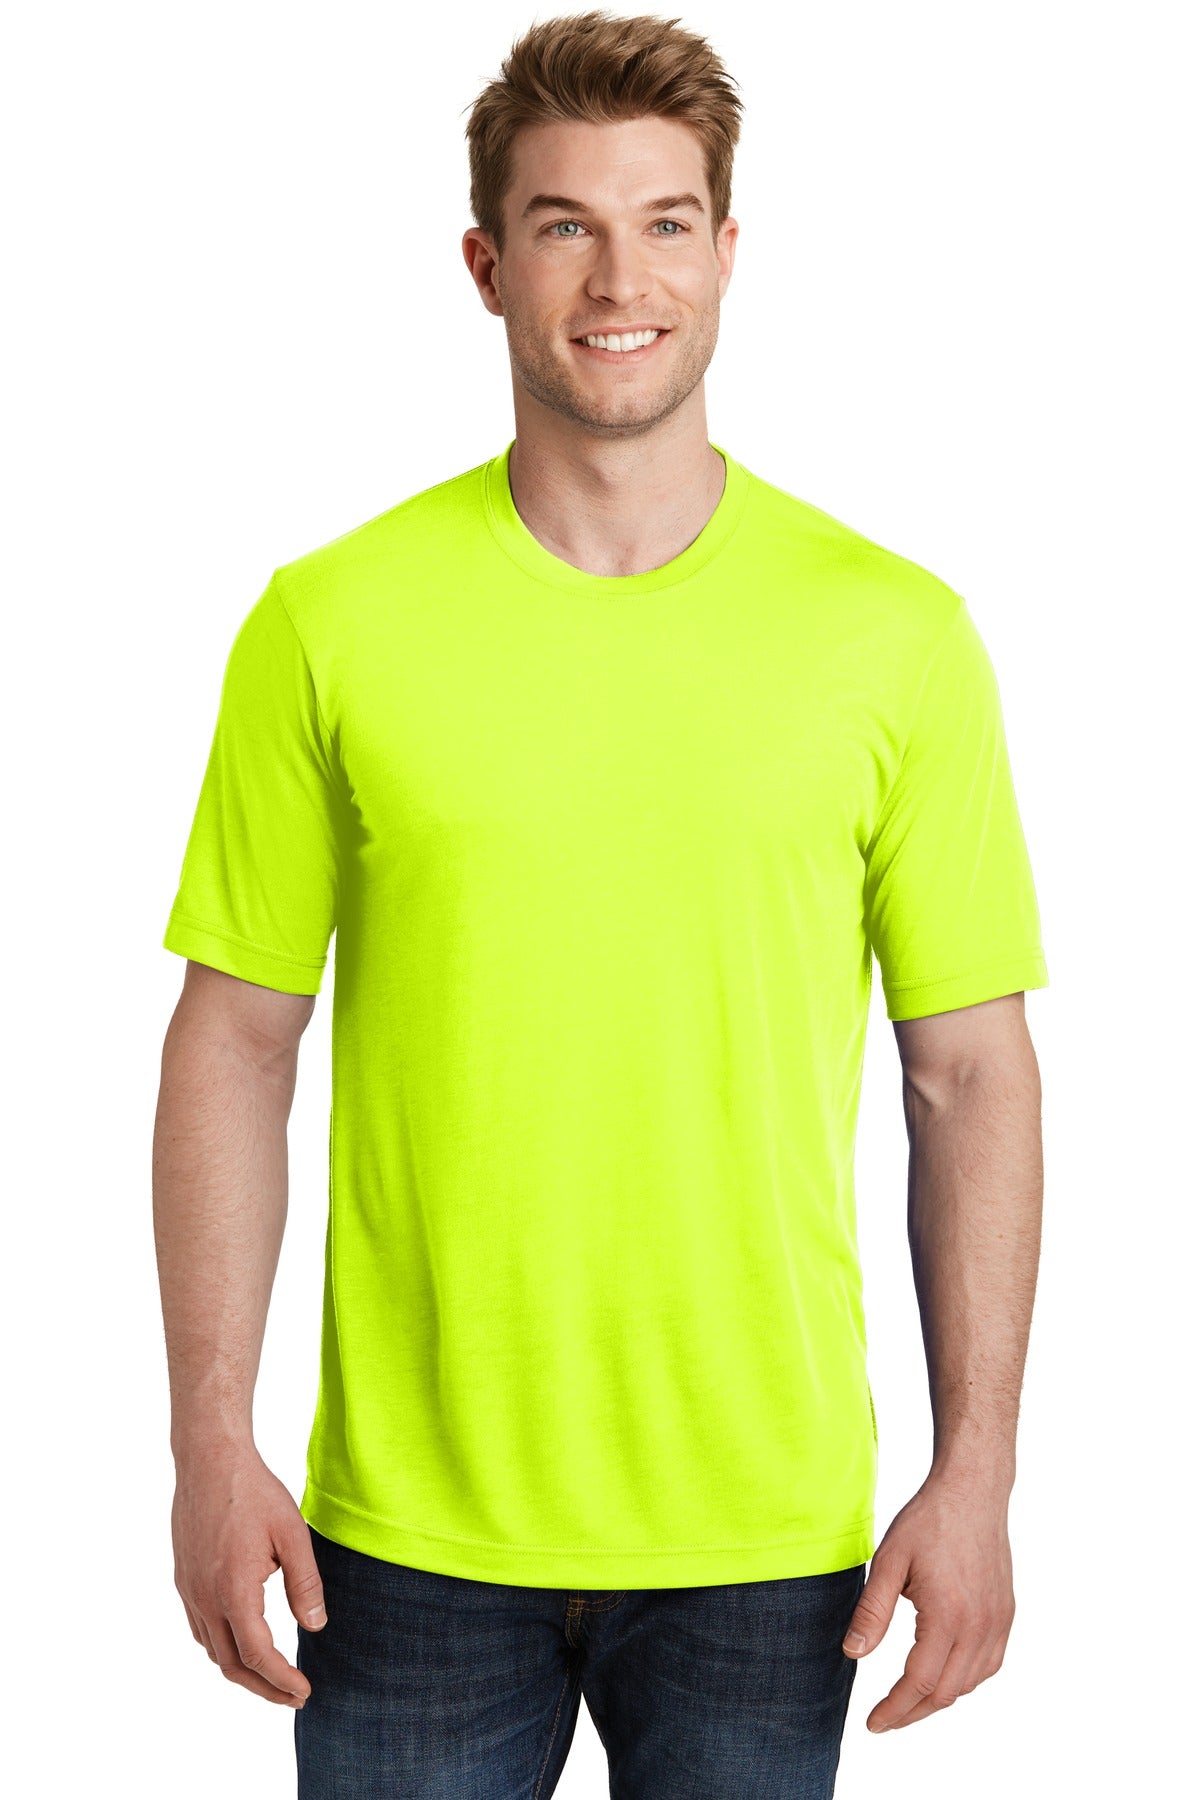 Photo of Sport-Tek T-Shirts ST450  color  Neon Yellow